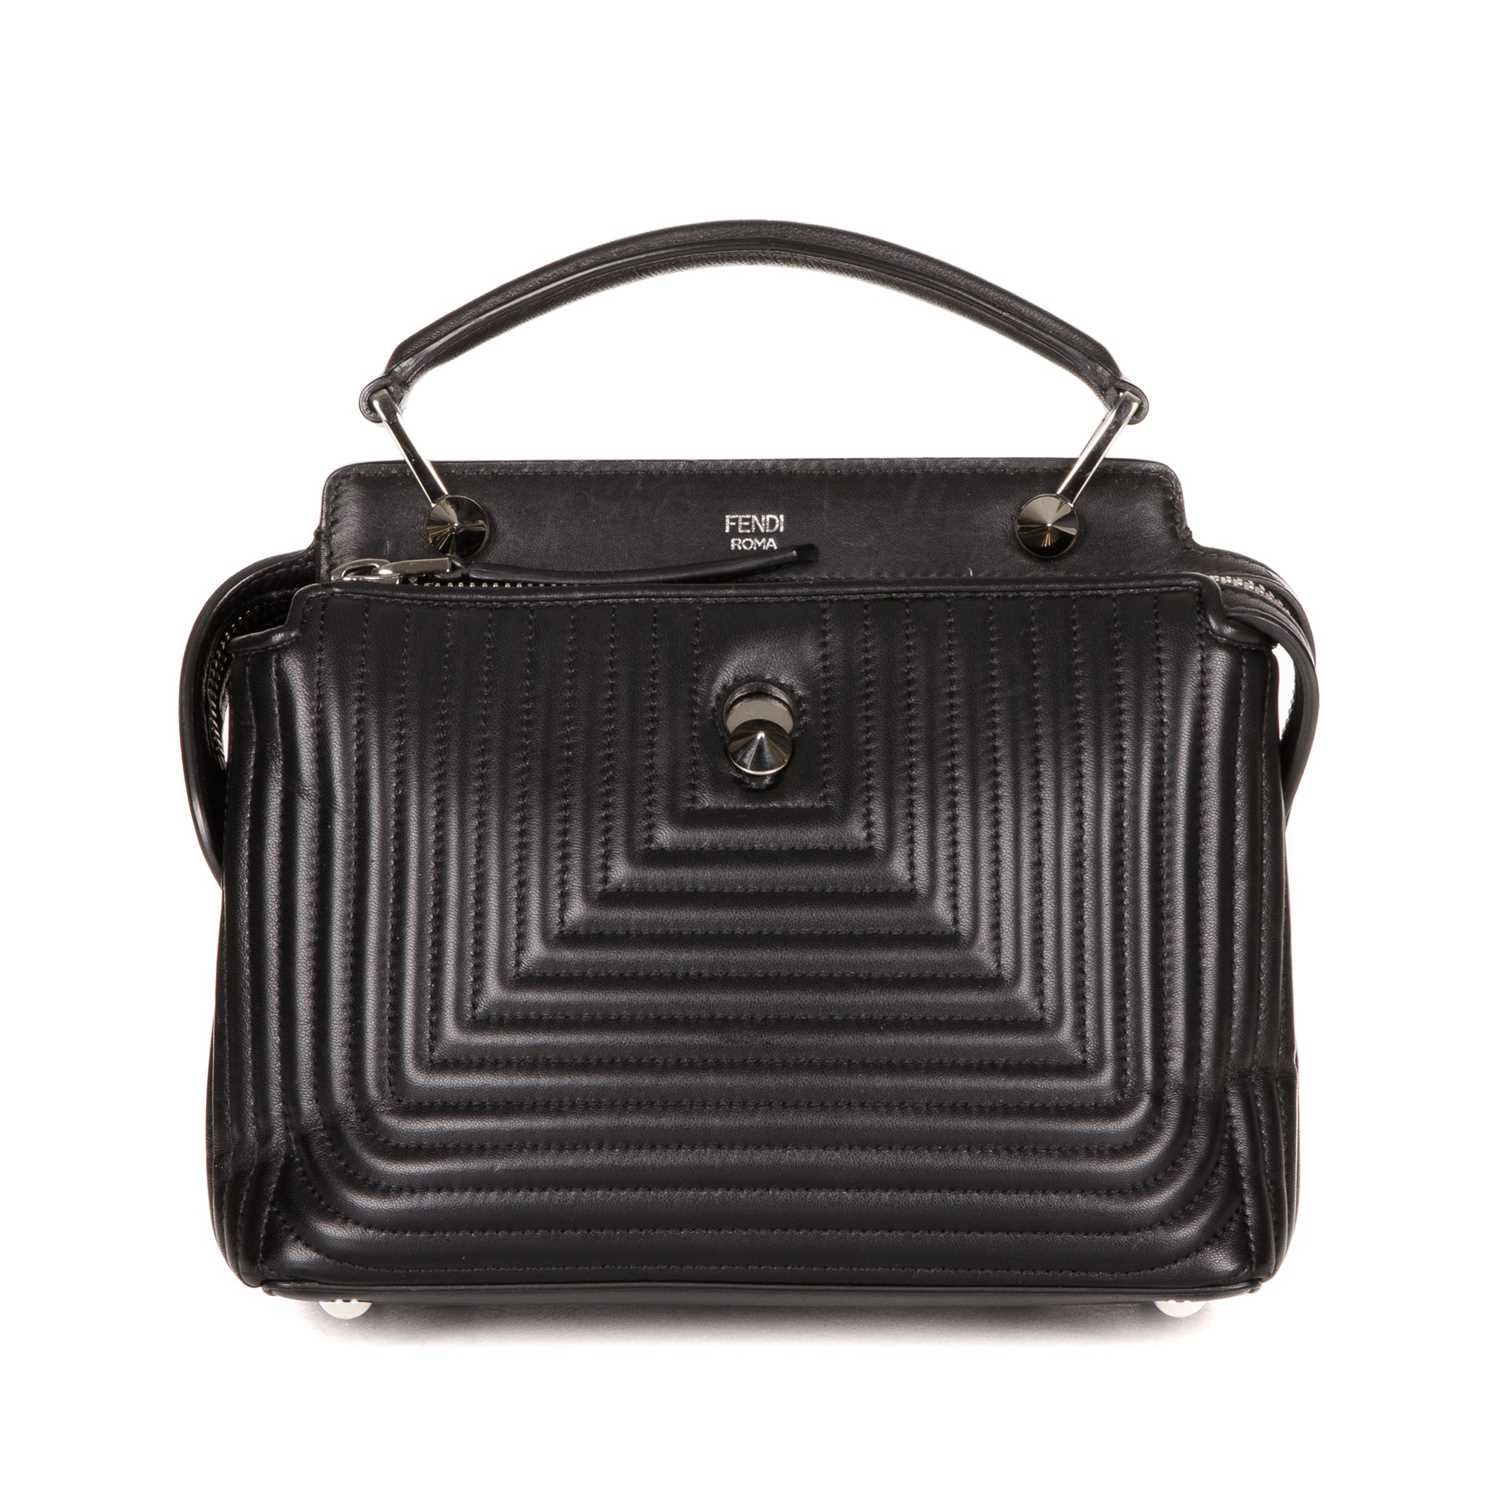 Fendi, a black Dotcom handbag, designed with a quilted black leather exterior, silver-tone hardware,